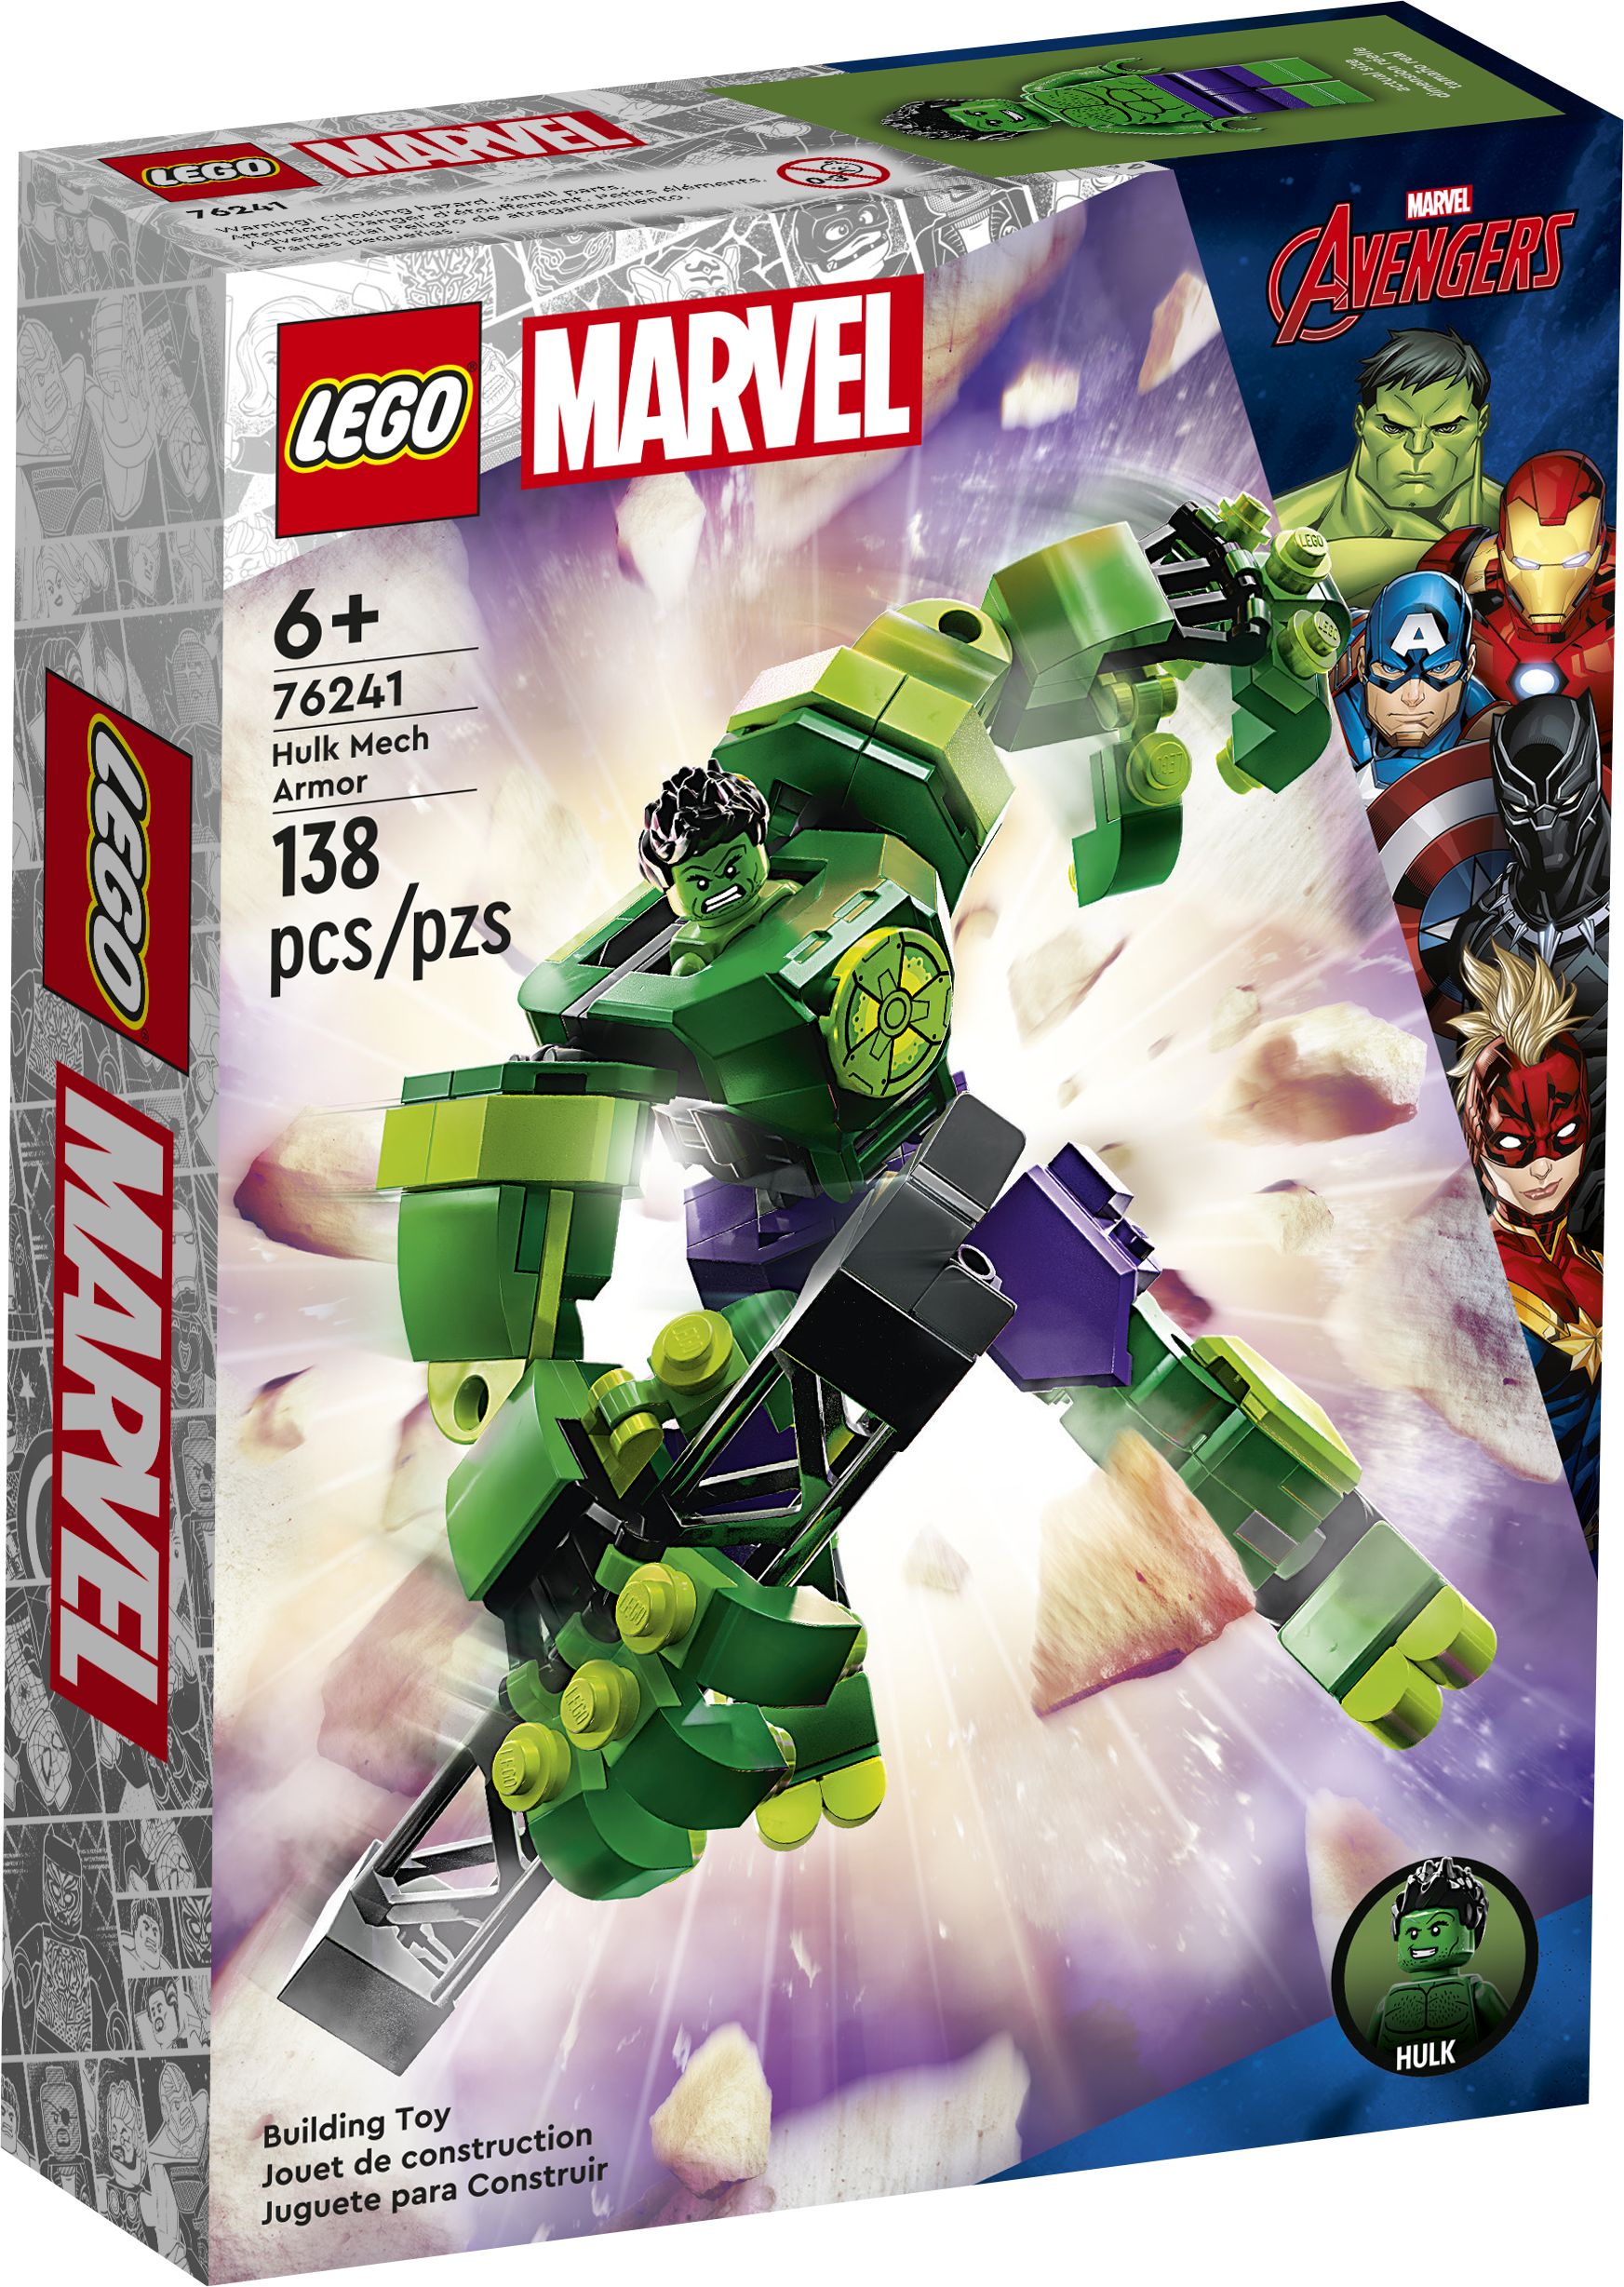 LEGO Super Heroes 76241 Hulk Mech LEGO_76241_Box1_v39.jpg